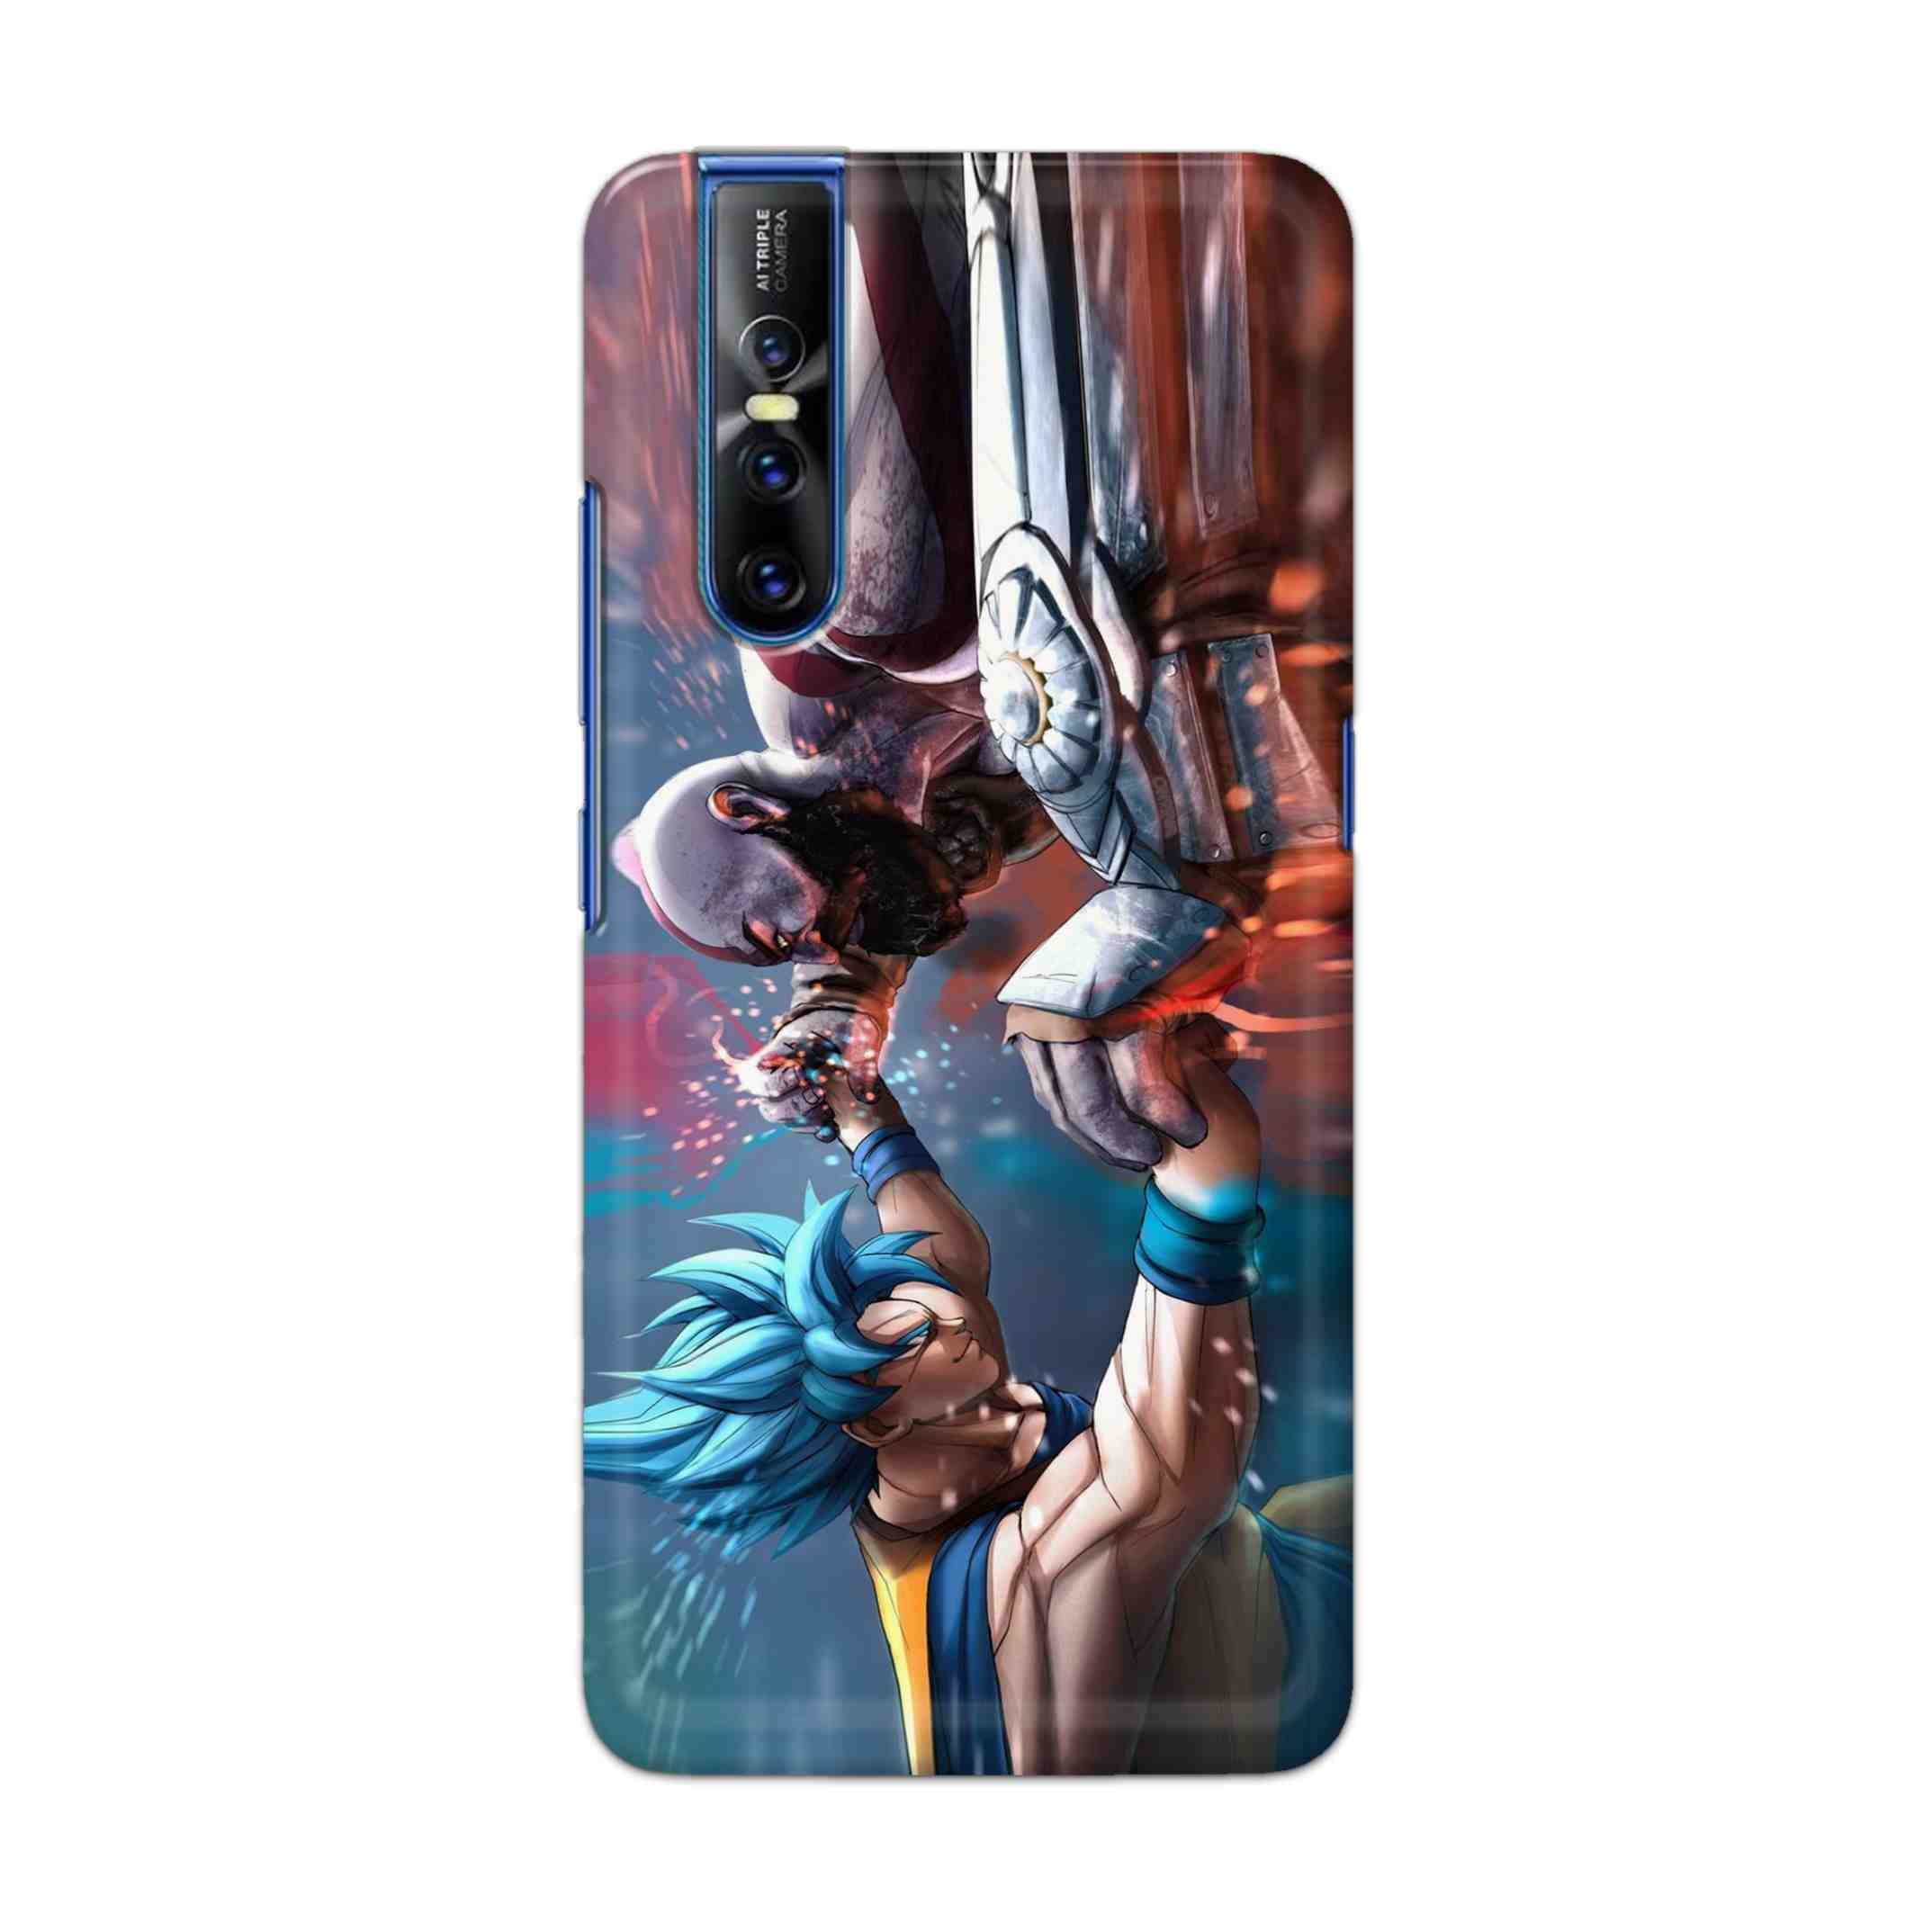 Buy Goku Vs Kratos Hard Back Mobile Phone Case Cover For Vivo V15 Pro Online